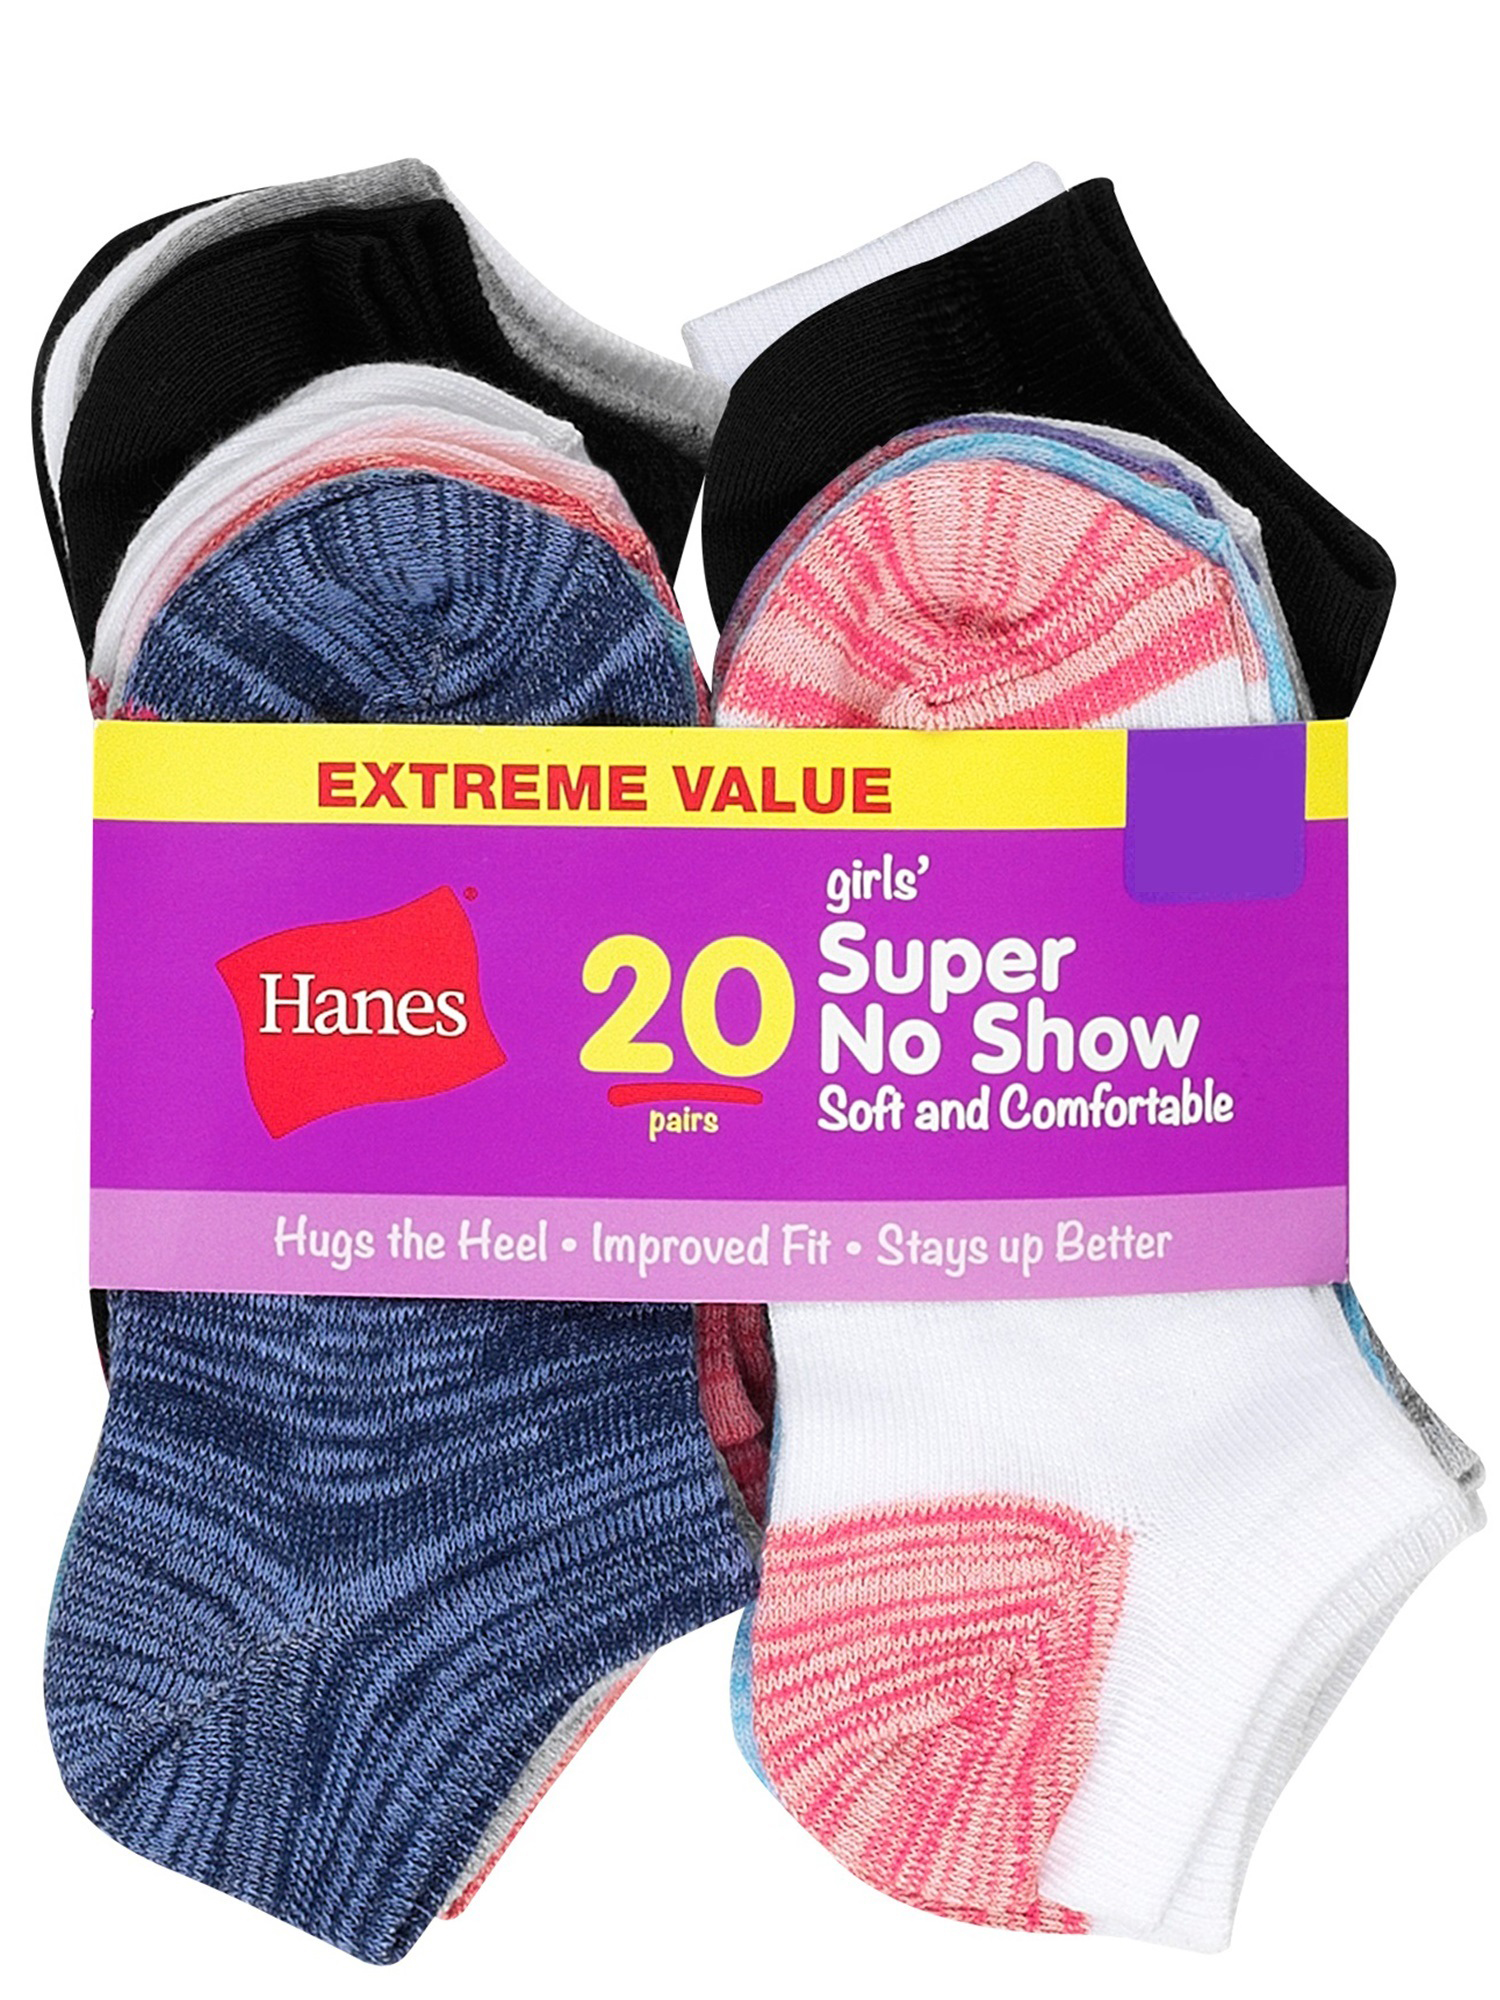 Hanes Girls' Super No Show Socks, 20 Pack, Sizes S-L - image 4 of 4